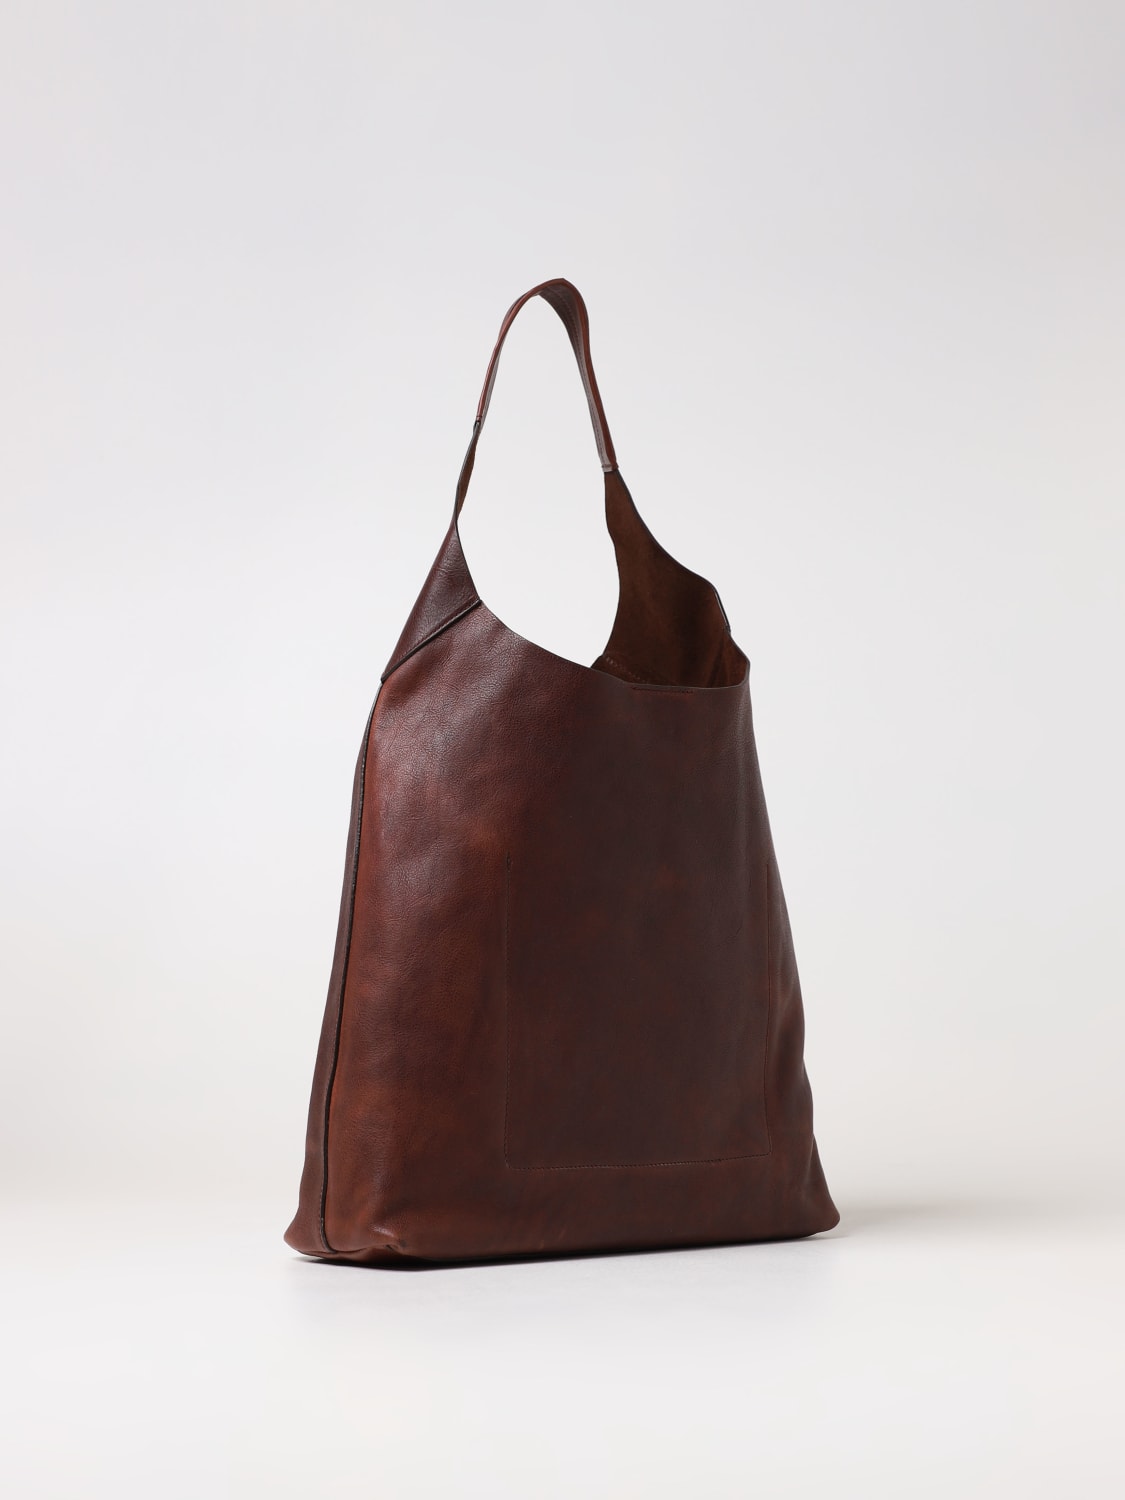 IL BISONTE: Le Laudi bag in aged leather - Coffee | Il Bisonte